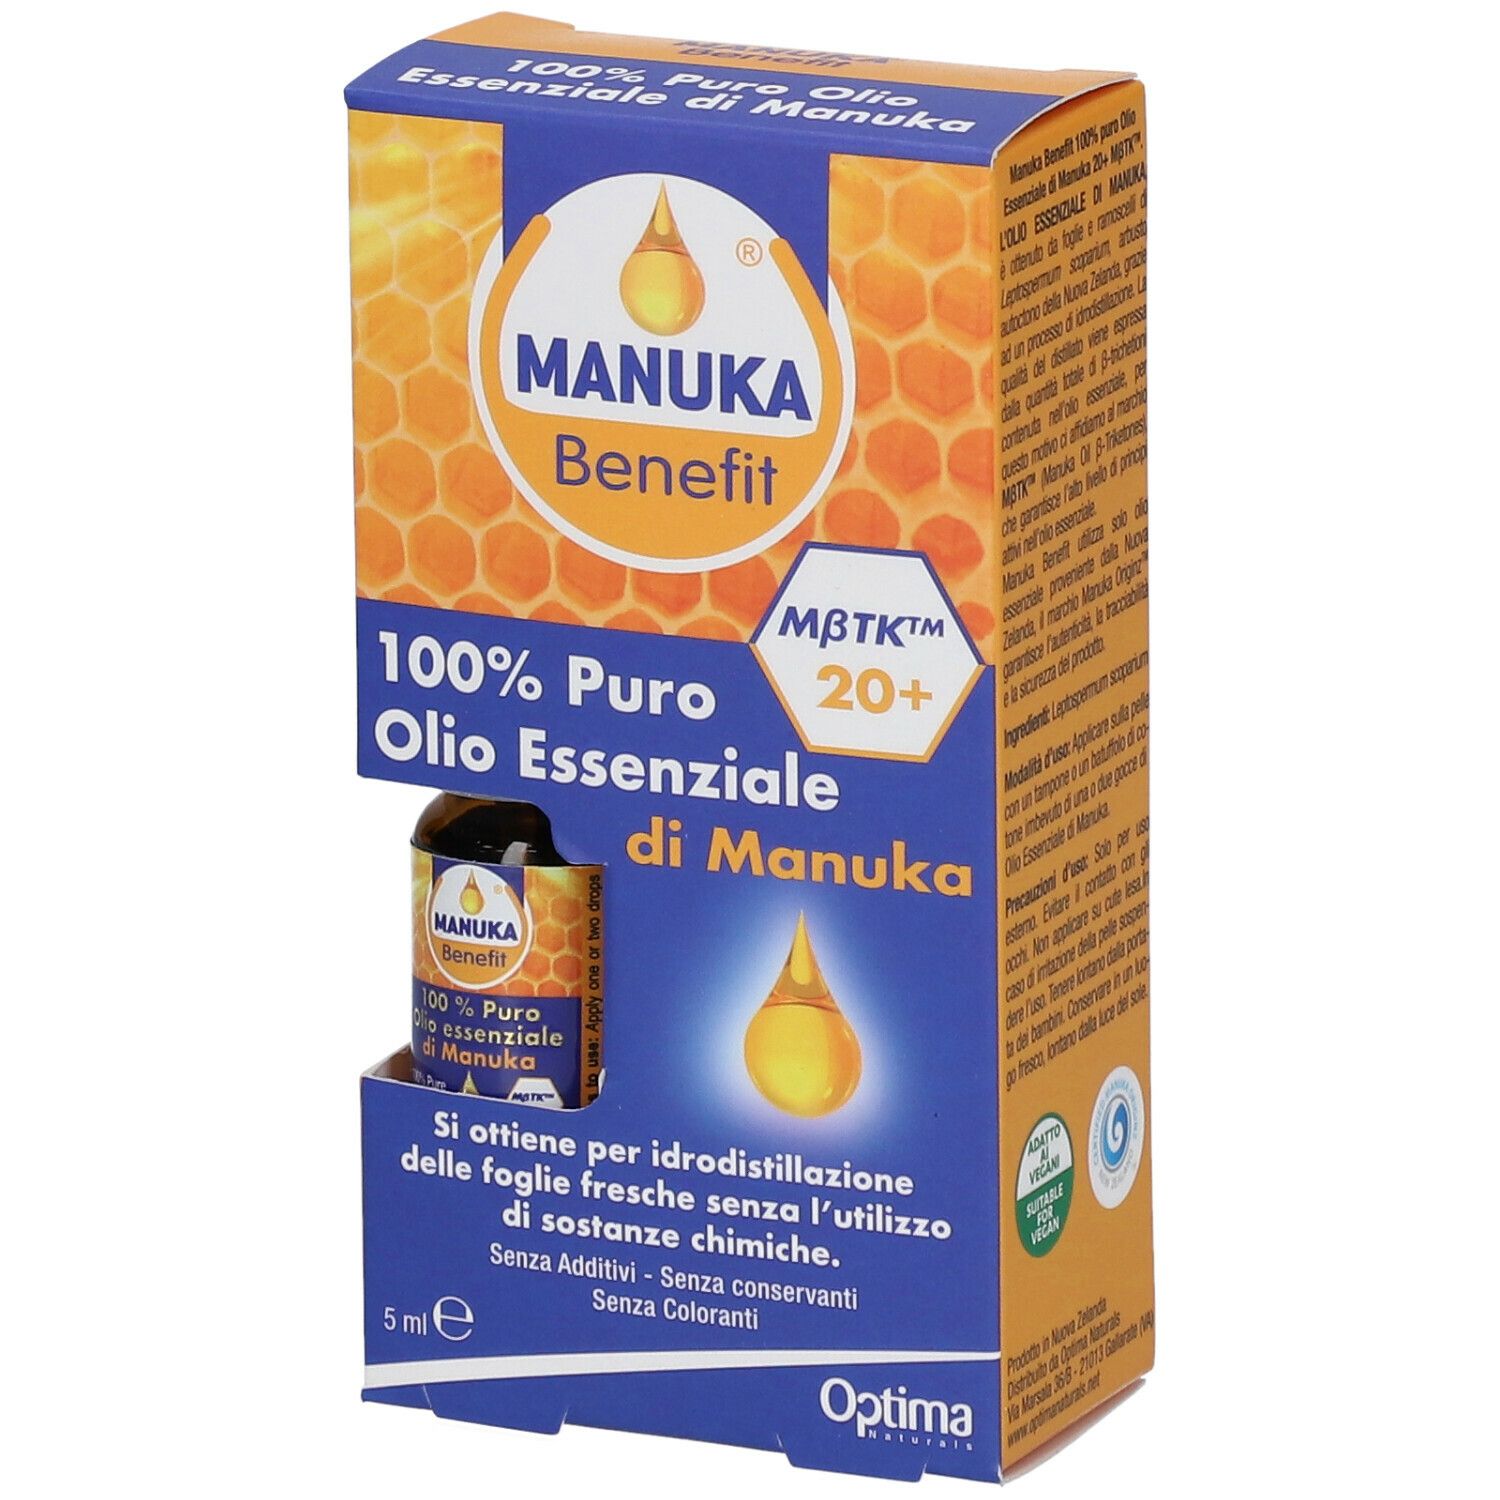 MANUKA® Benefit Olio Essenziale di Manuka